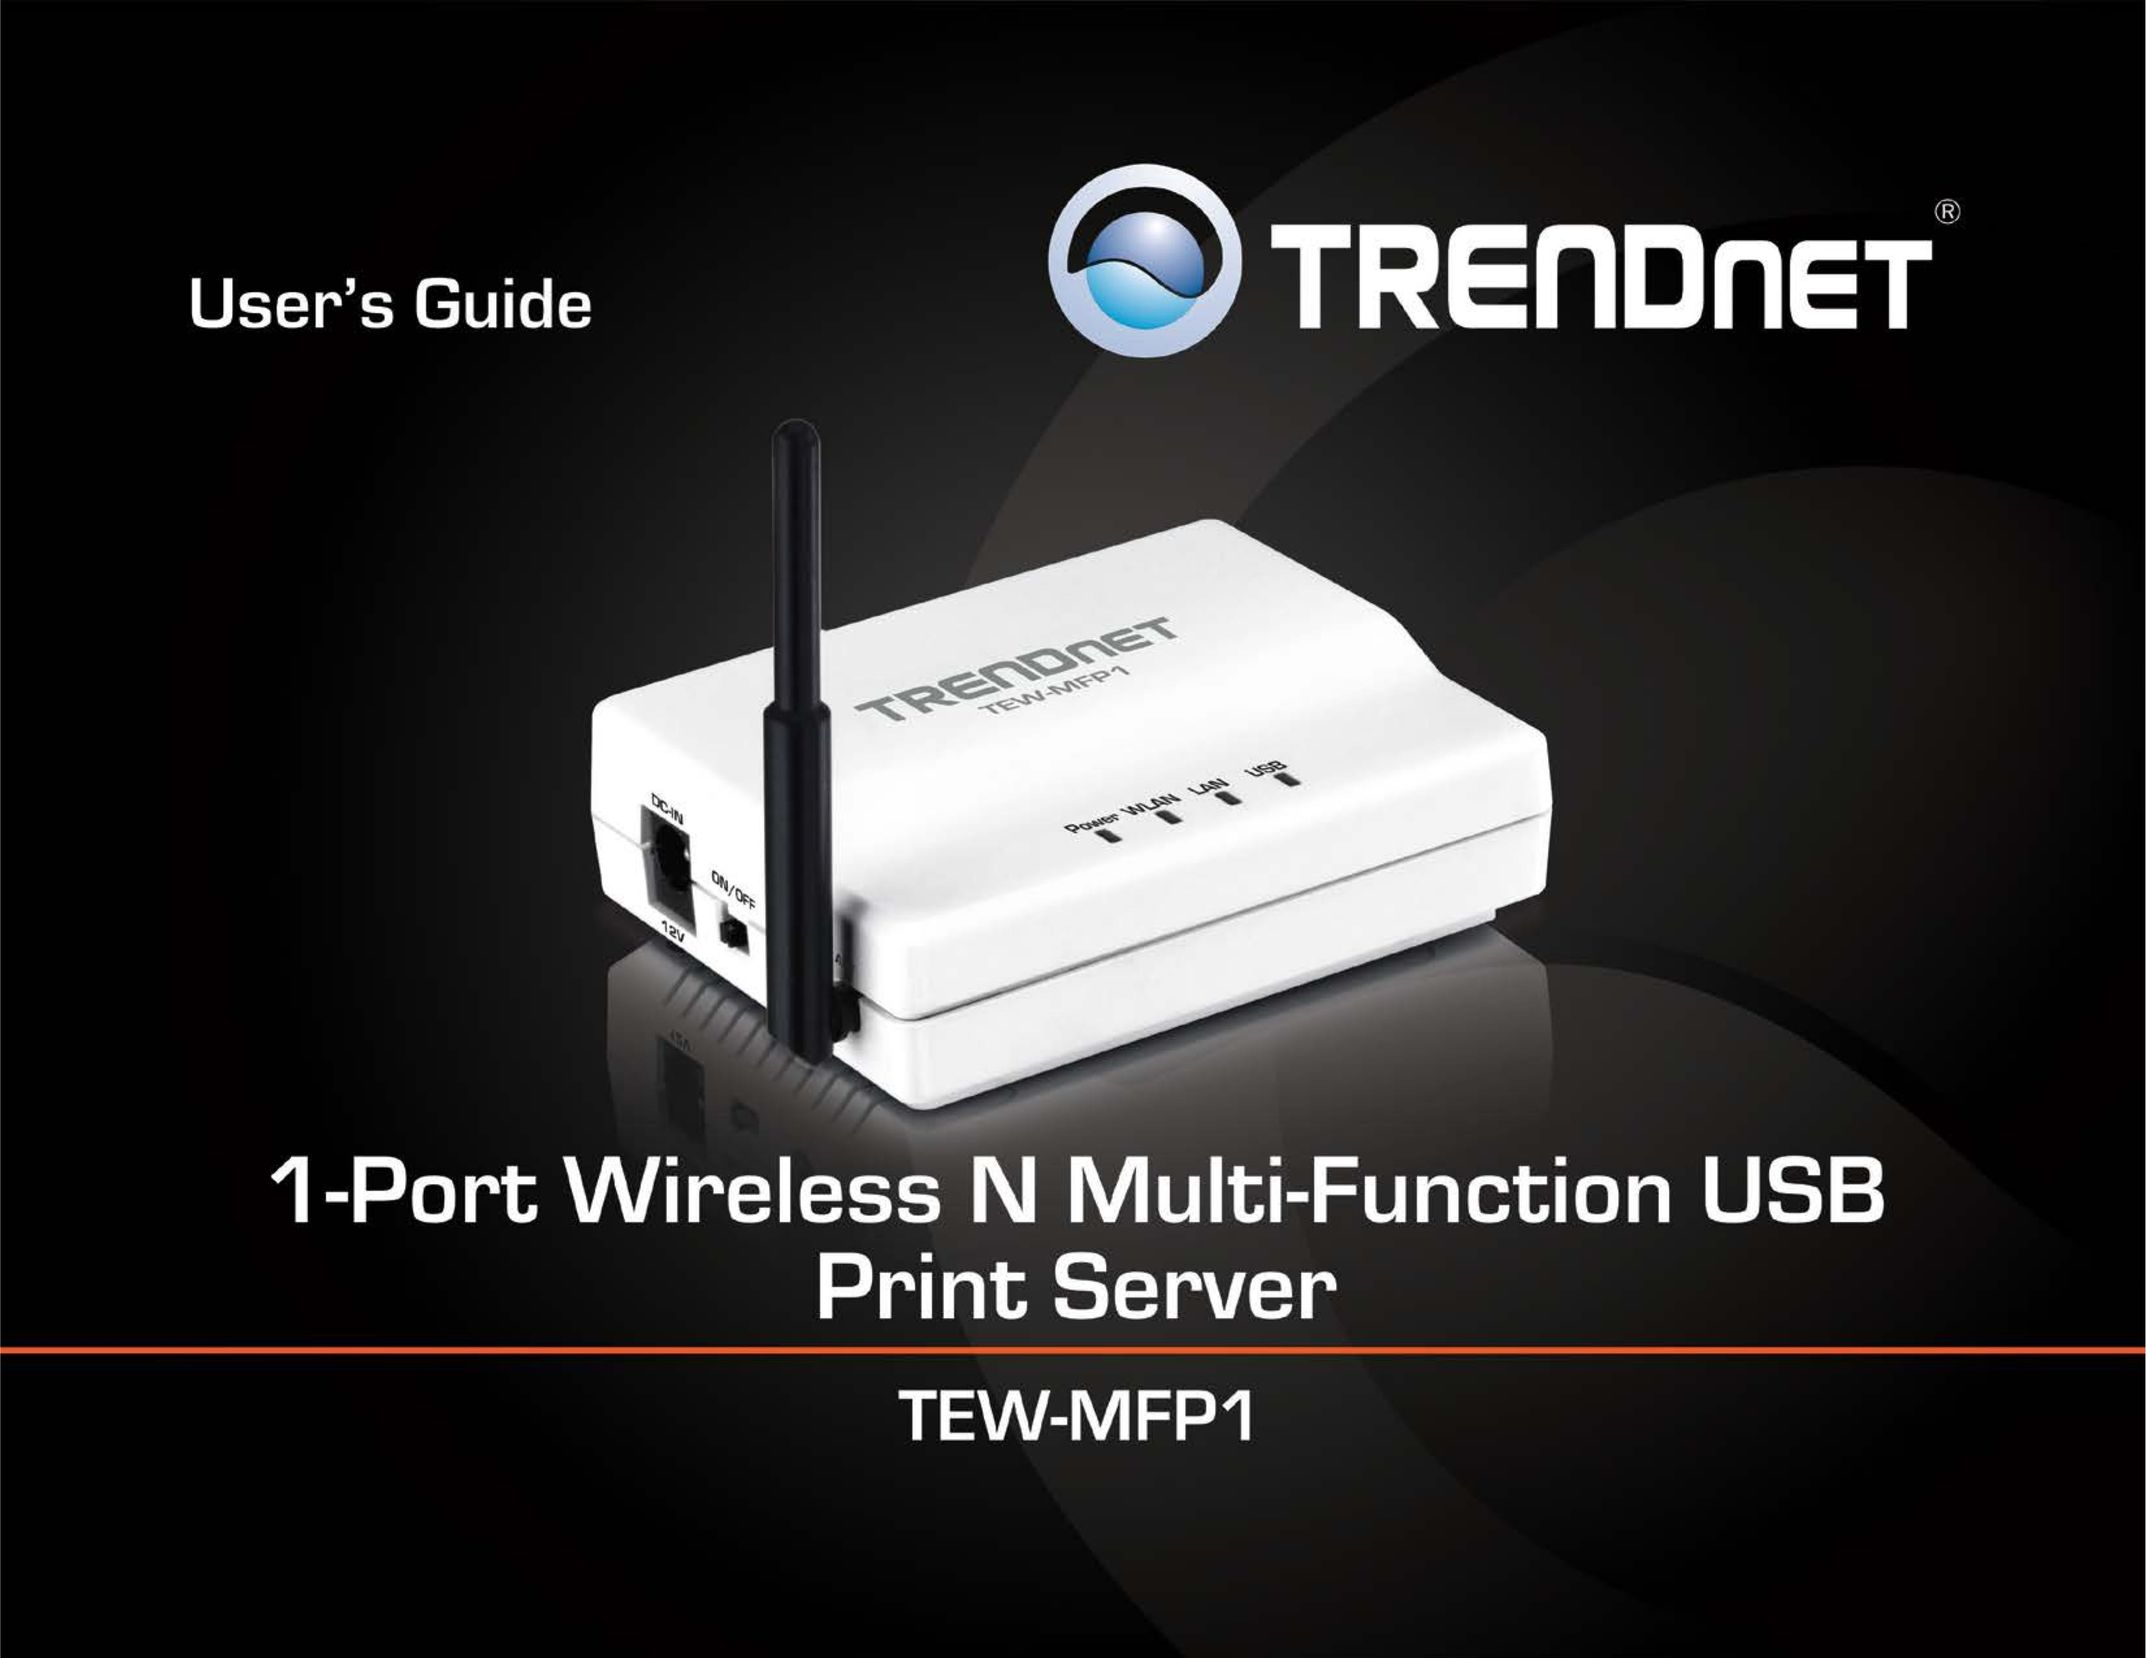 TRENDnet 1-Port Wireless N Multi-Function USB Print Server Printer Accessories User Manual